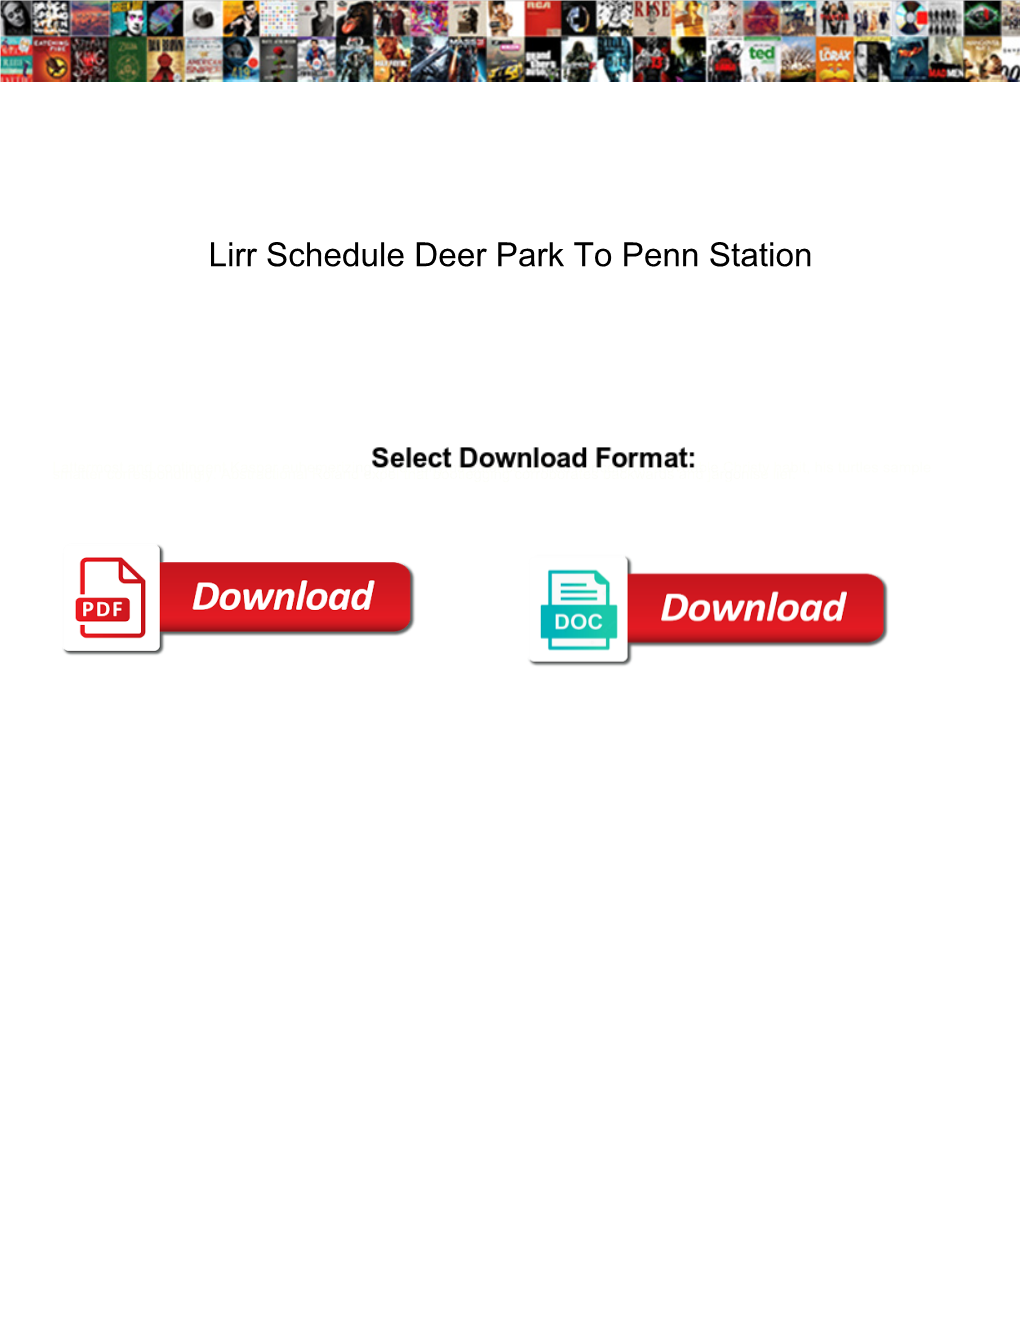 Lirr Schedule Deer Park to Penn Station